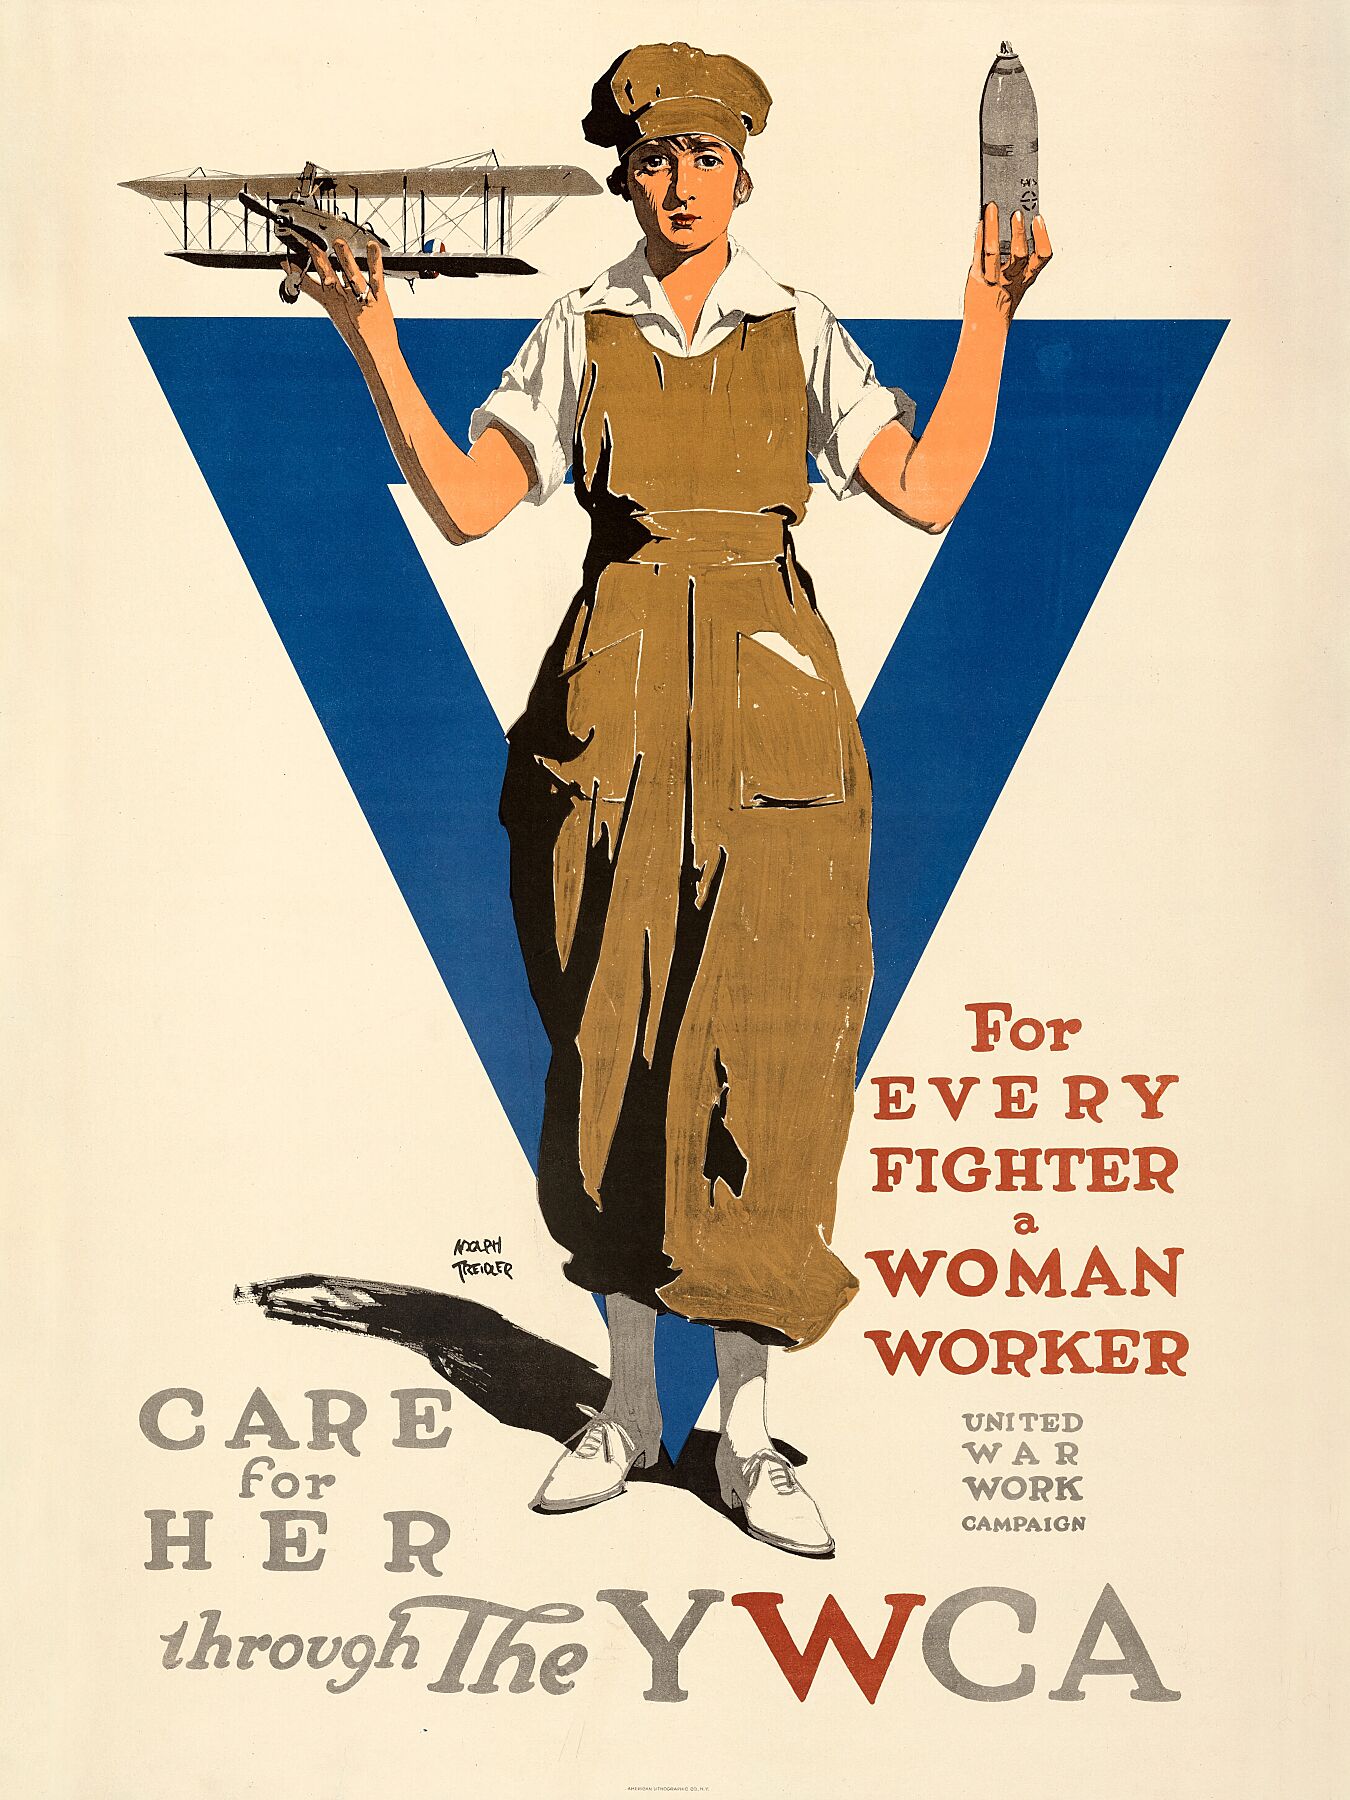 YWCA poster by Adolph Triedler - 1919